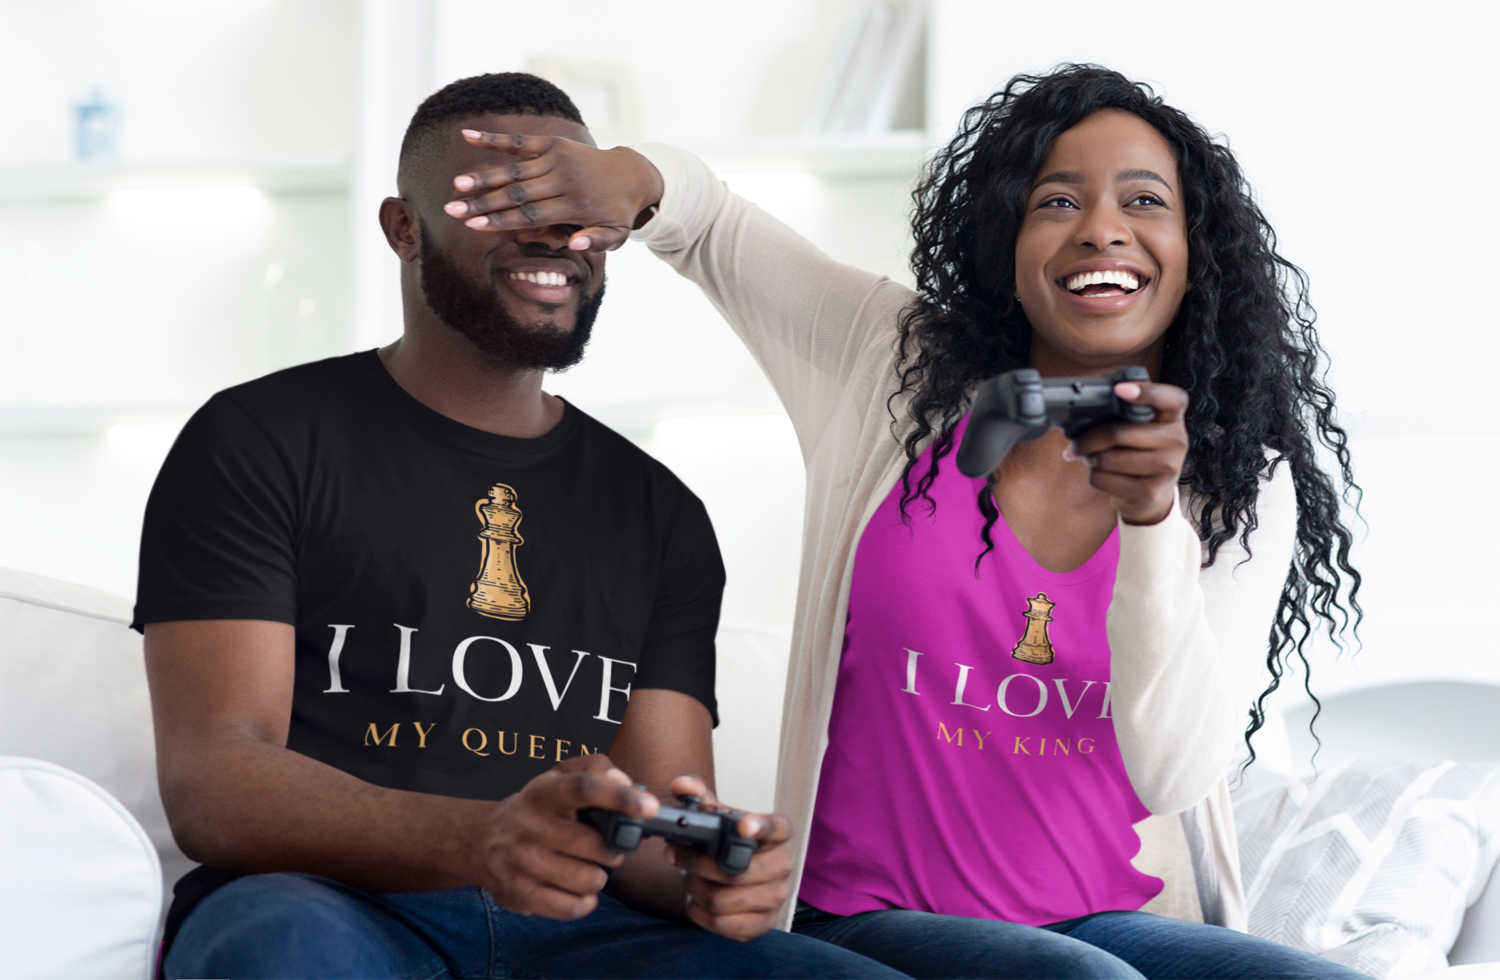 King: "I Love My Queen" Unisex Short-sleeved t-shirt